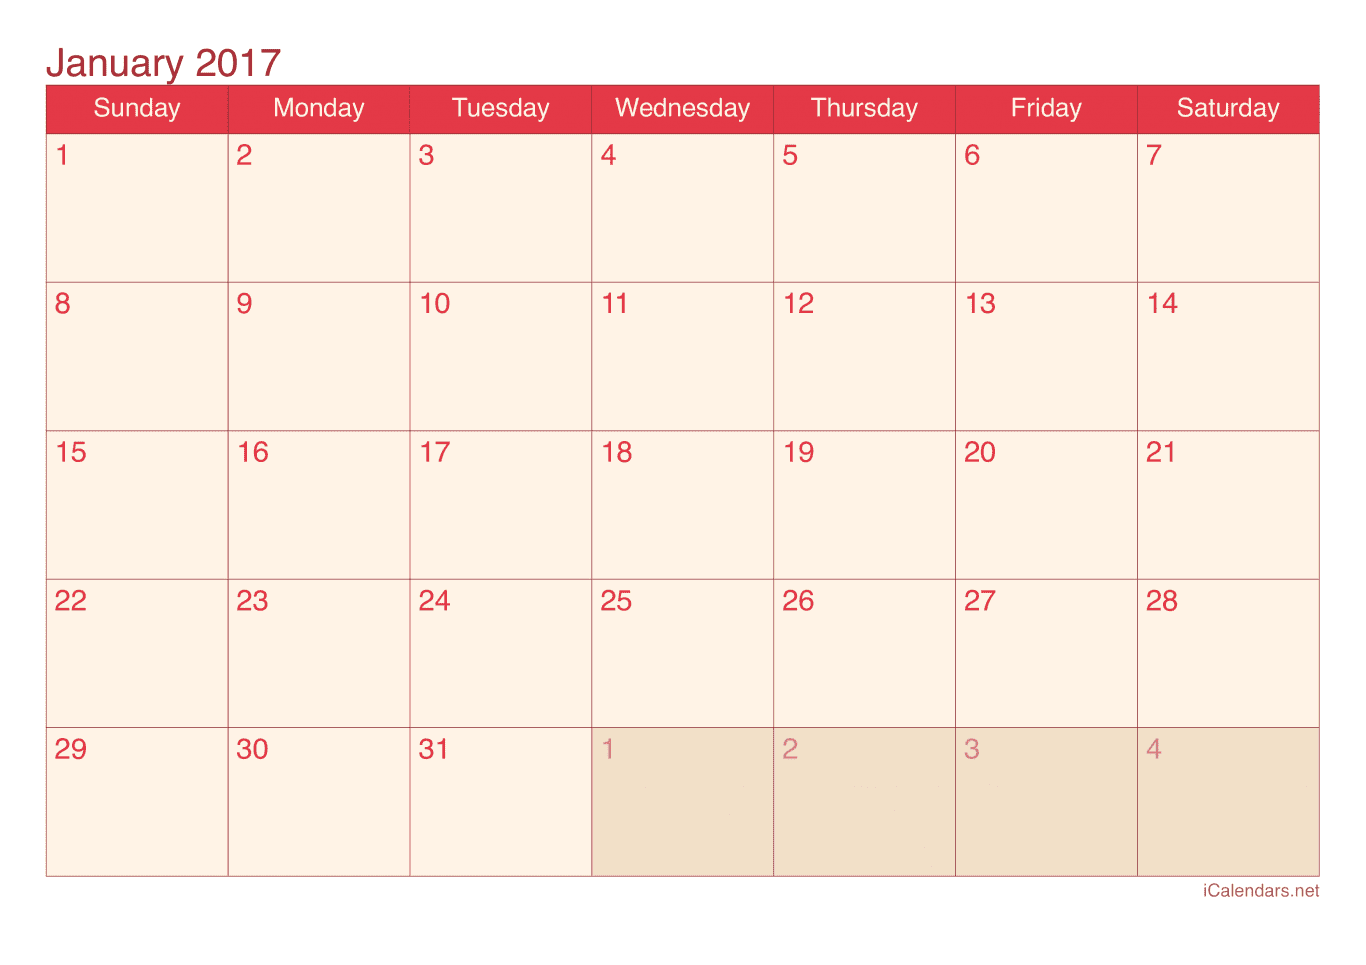 2017 Monthly Calendar - Cherry